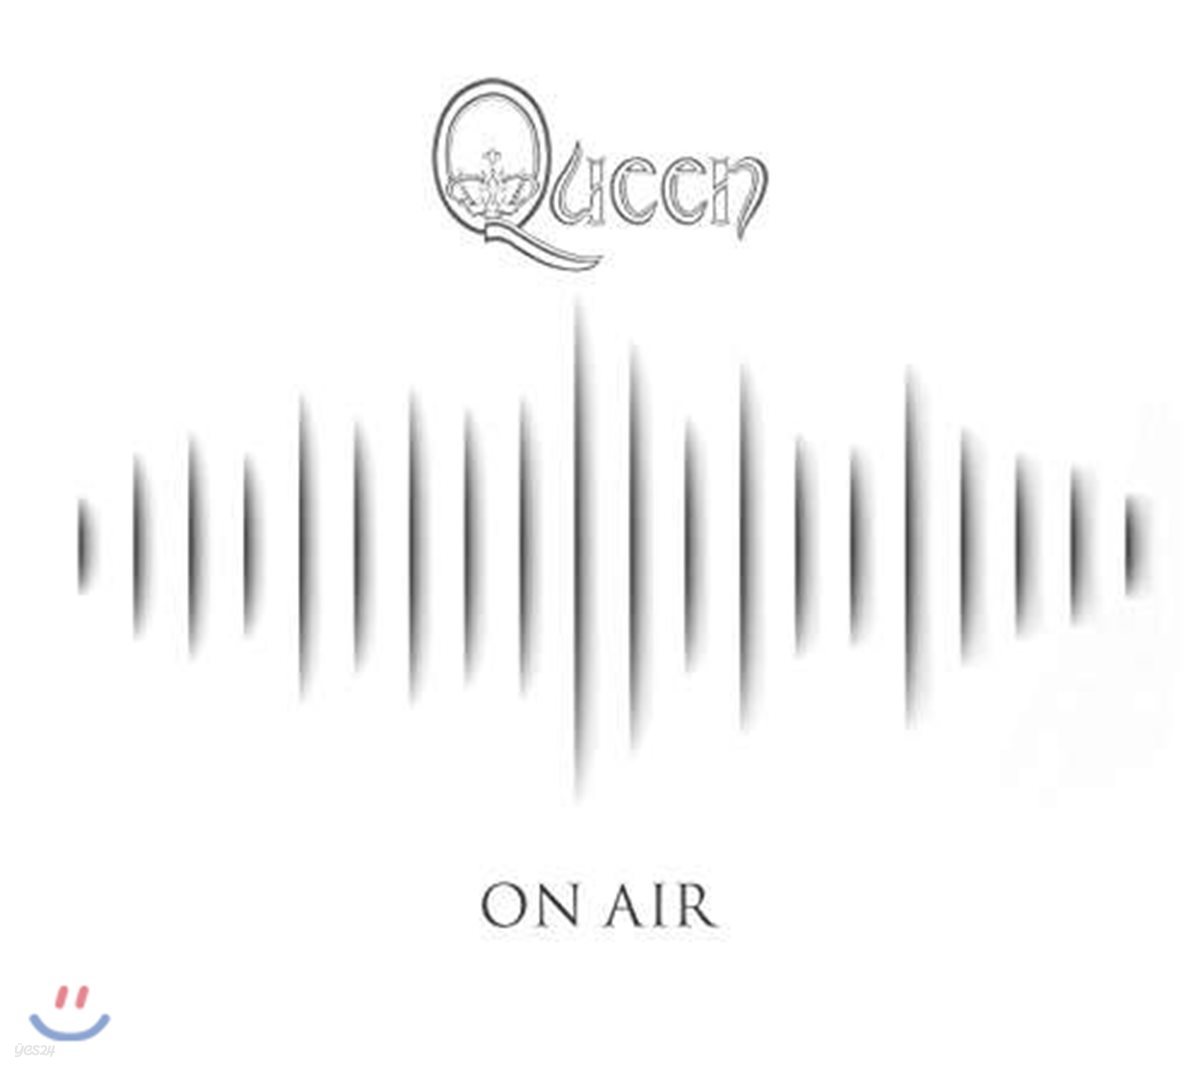 Queen - On Air 퀸의 1973-1977 BBC 라디오 세션 녹음 전곡집